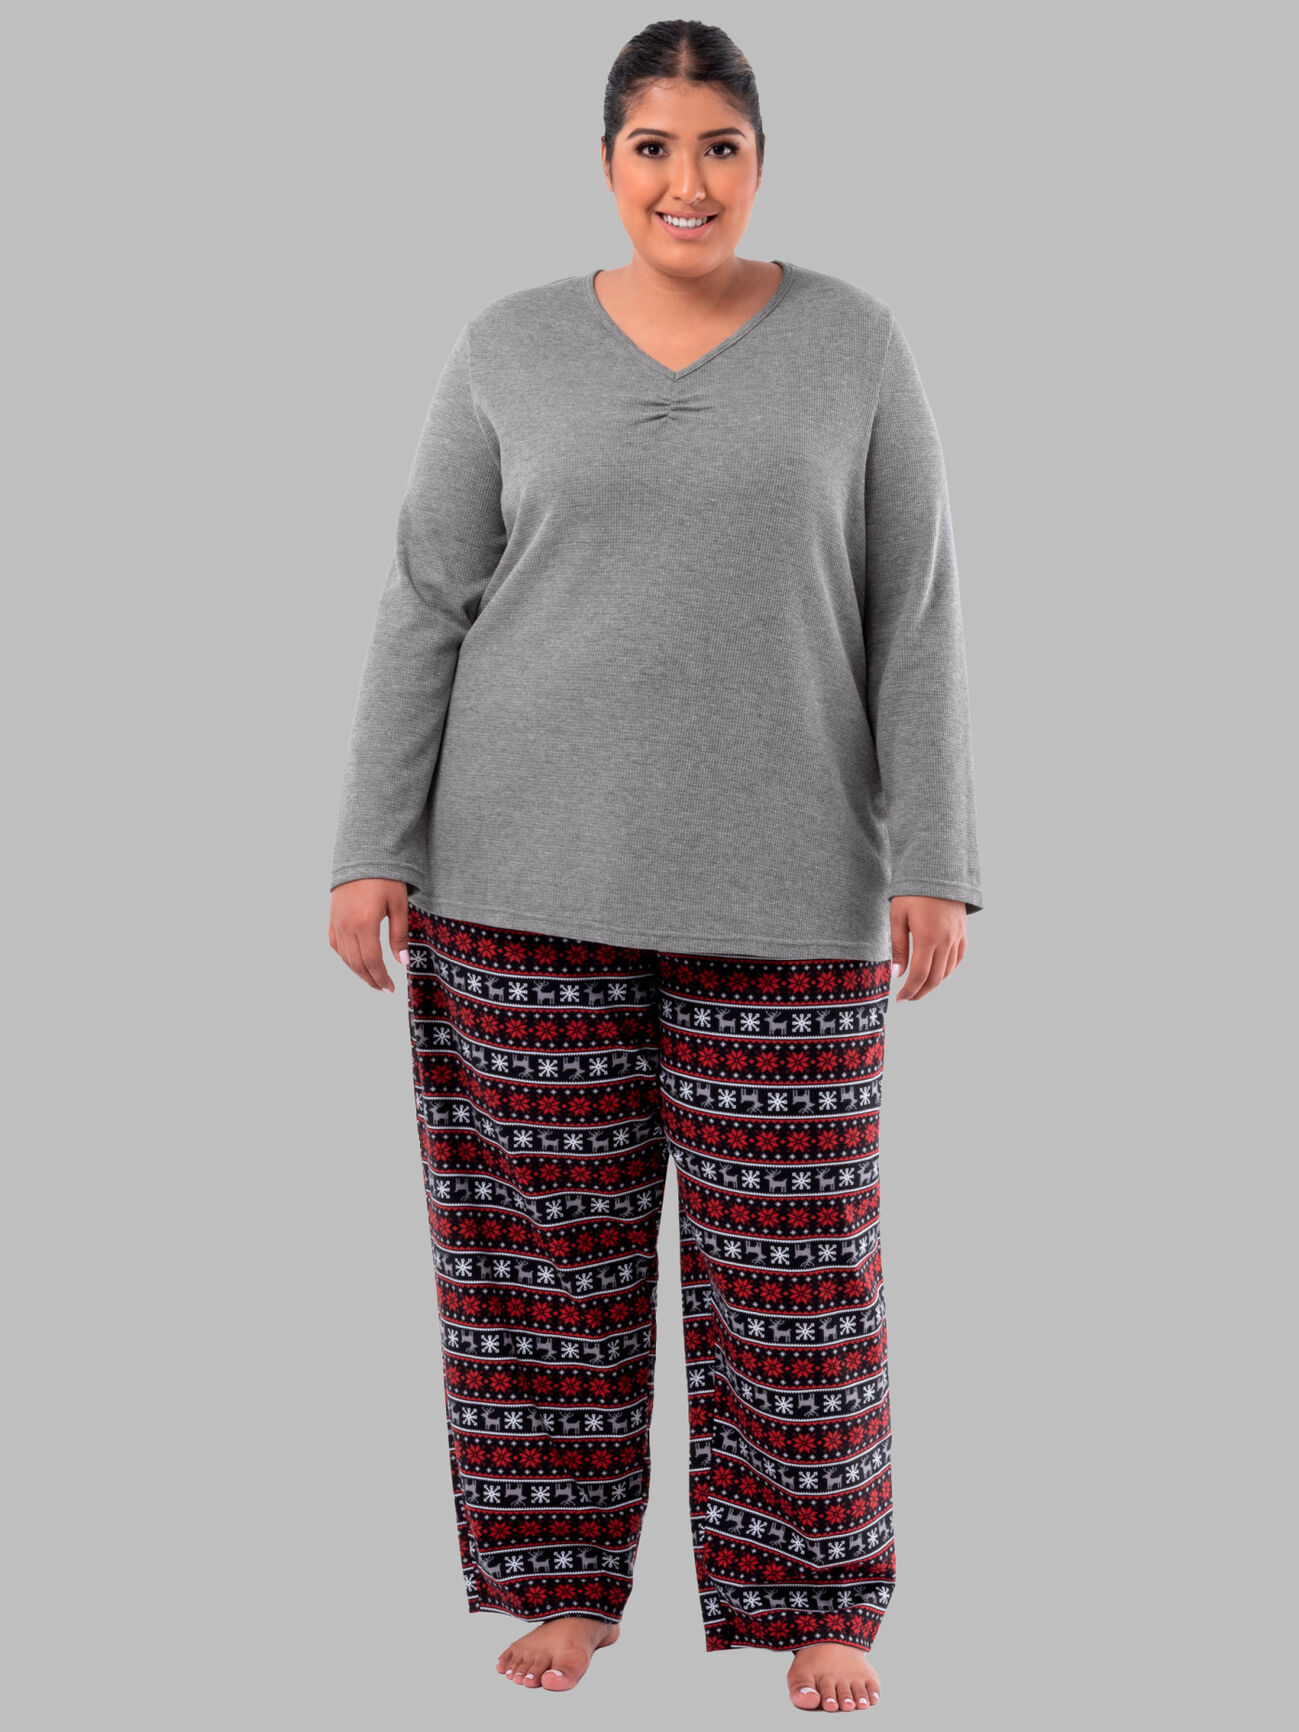 Women's Flannel Pyjamas